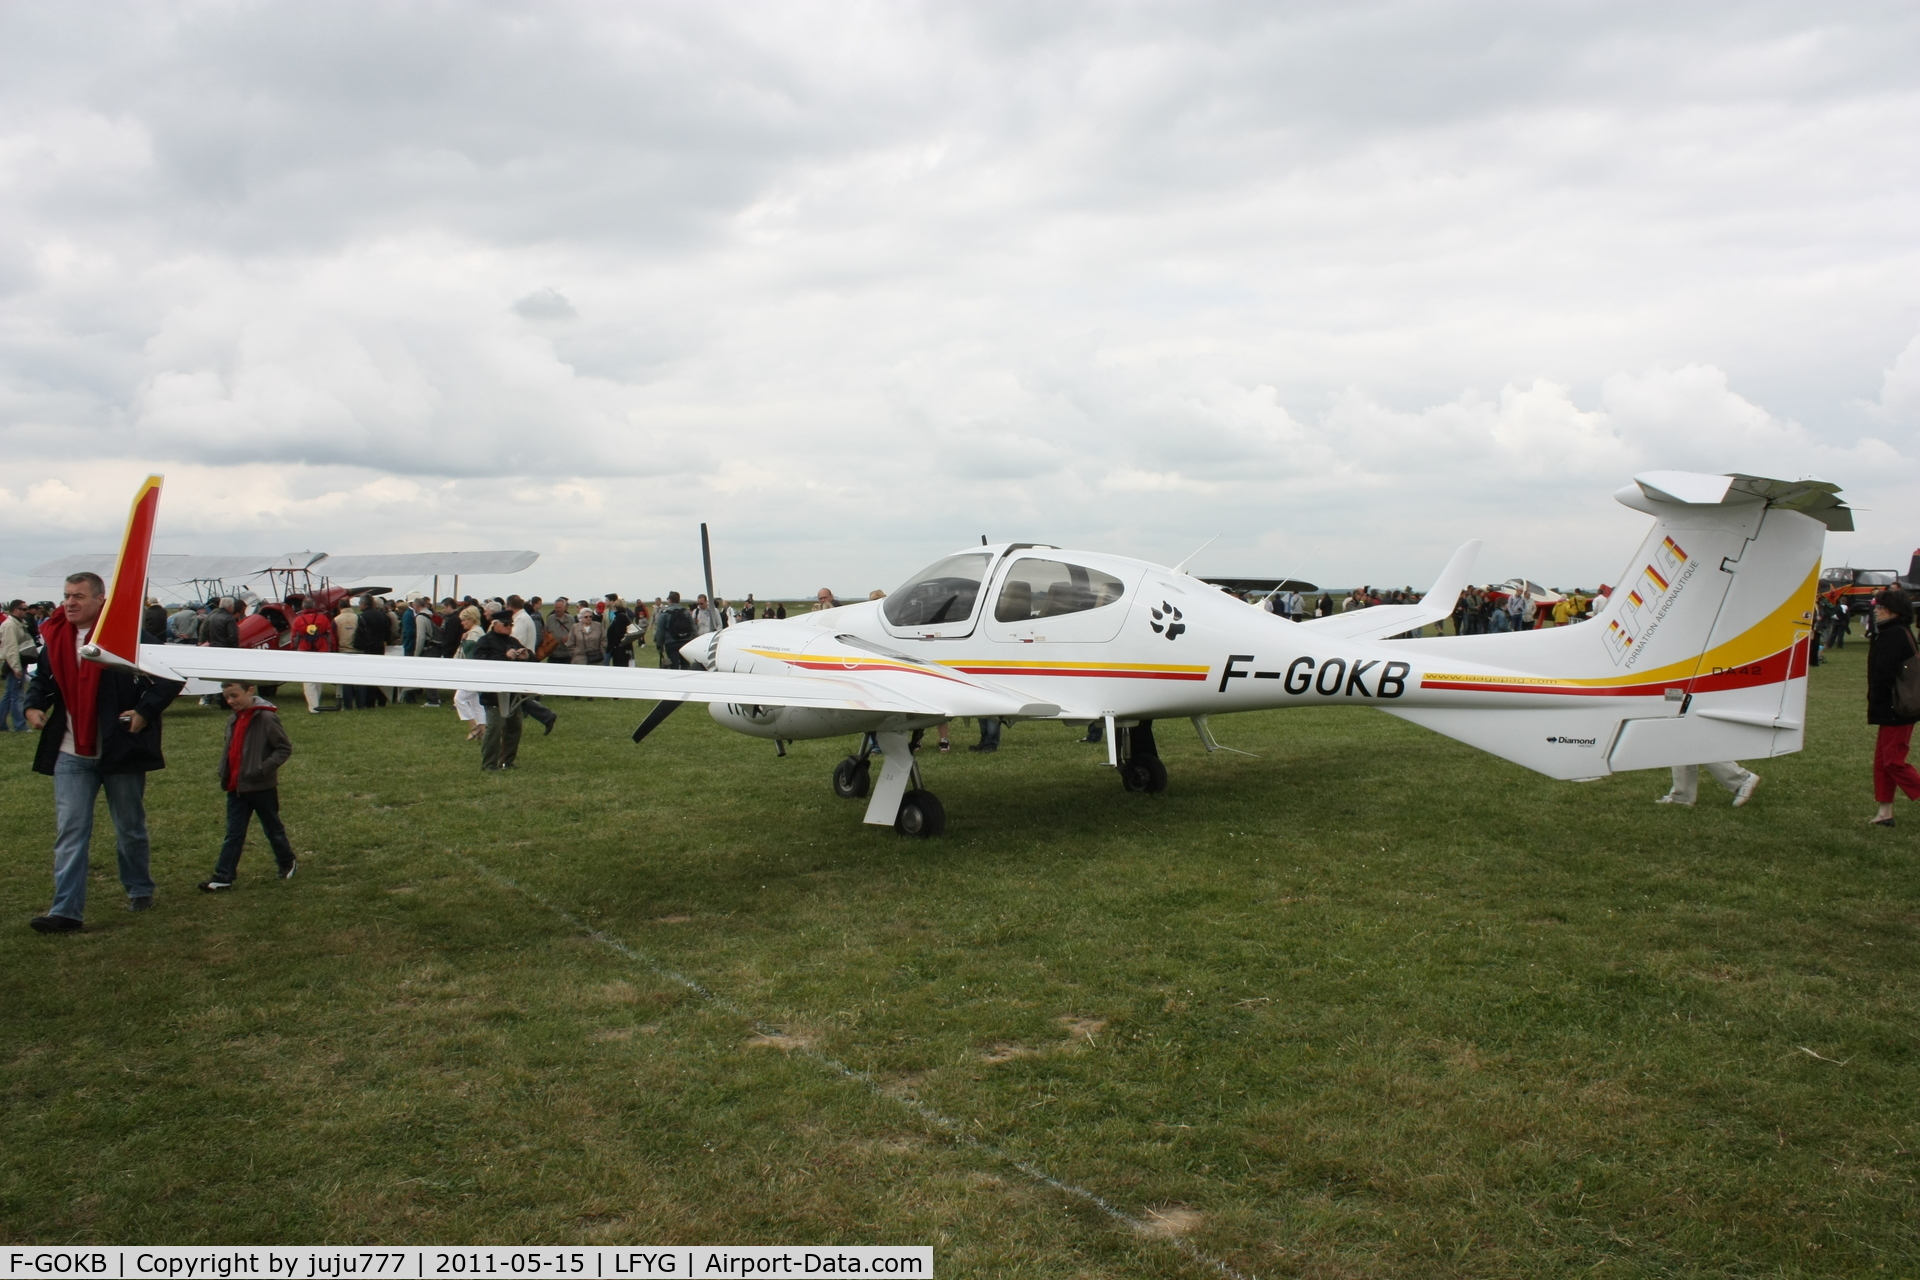 F-GOKB, 2006 Diamond DA-42 Twin Star C/N 42.074, on display at Cambrai Niergnies with tiger peint